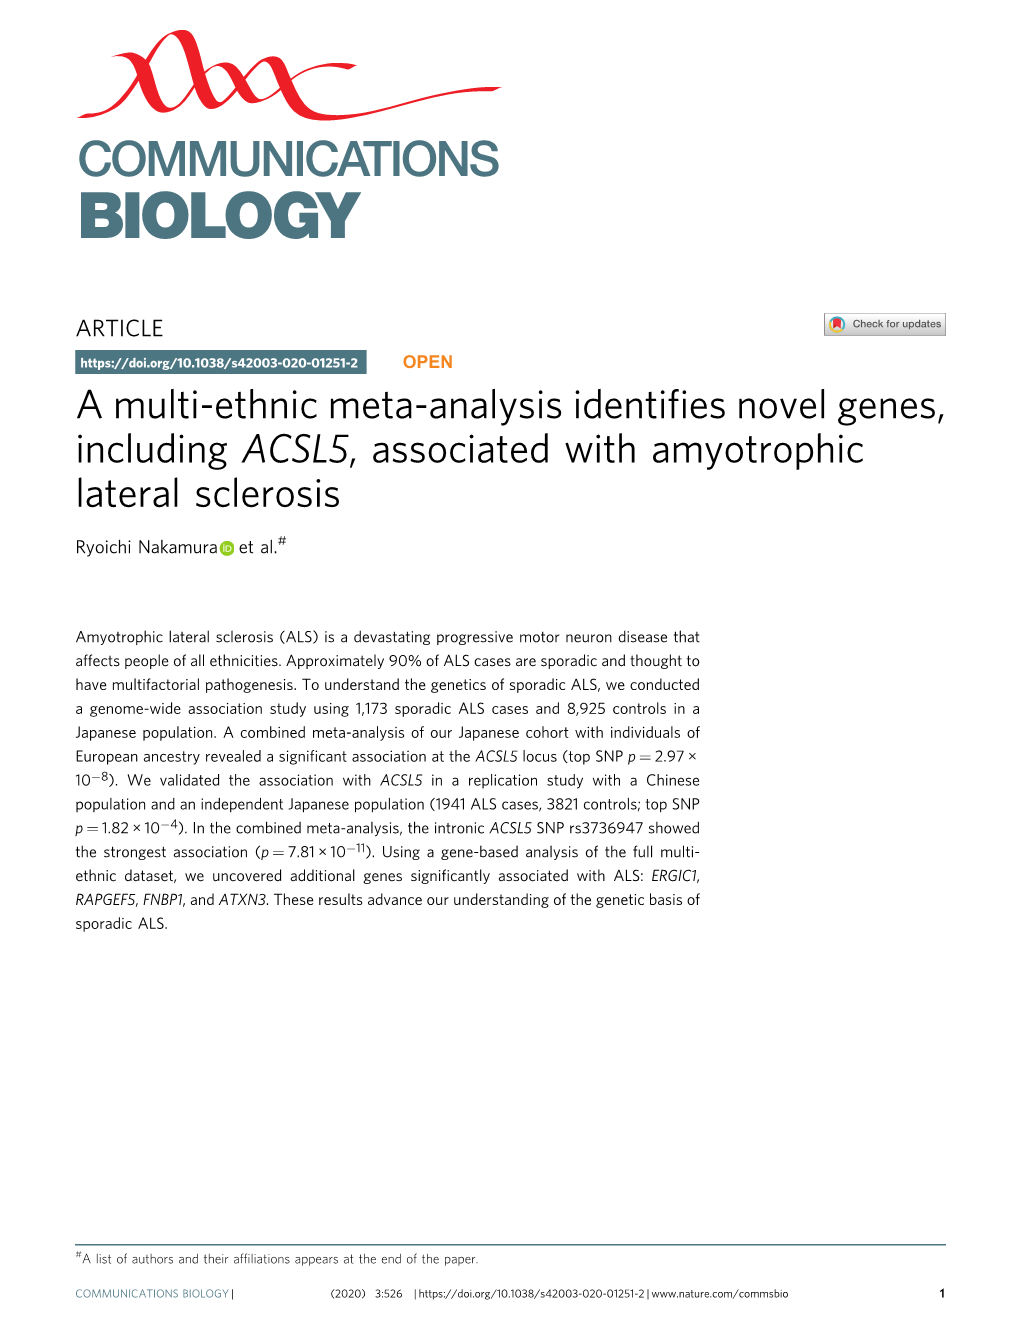 A Multi-Ethnic Meta-Analysis Identifies Novel Genes, Including ACSL5